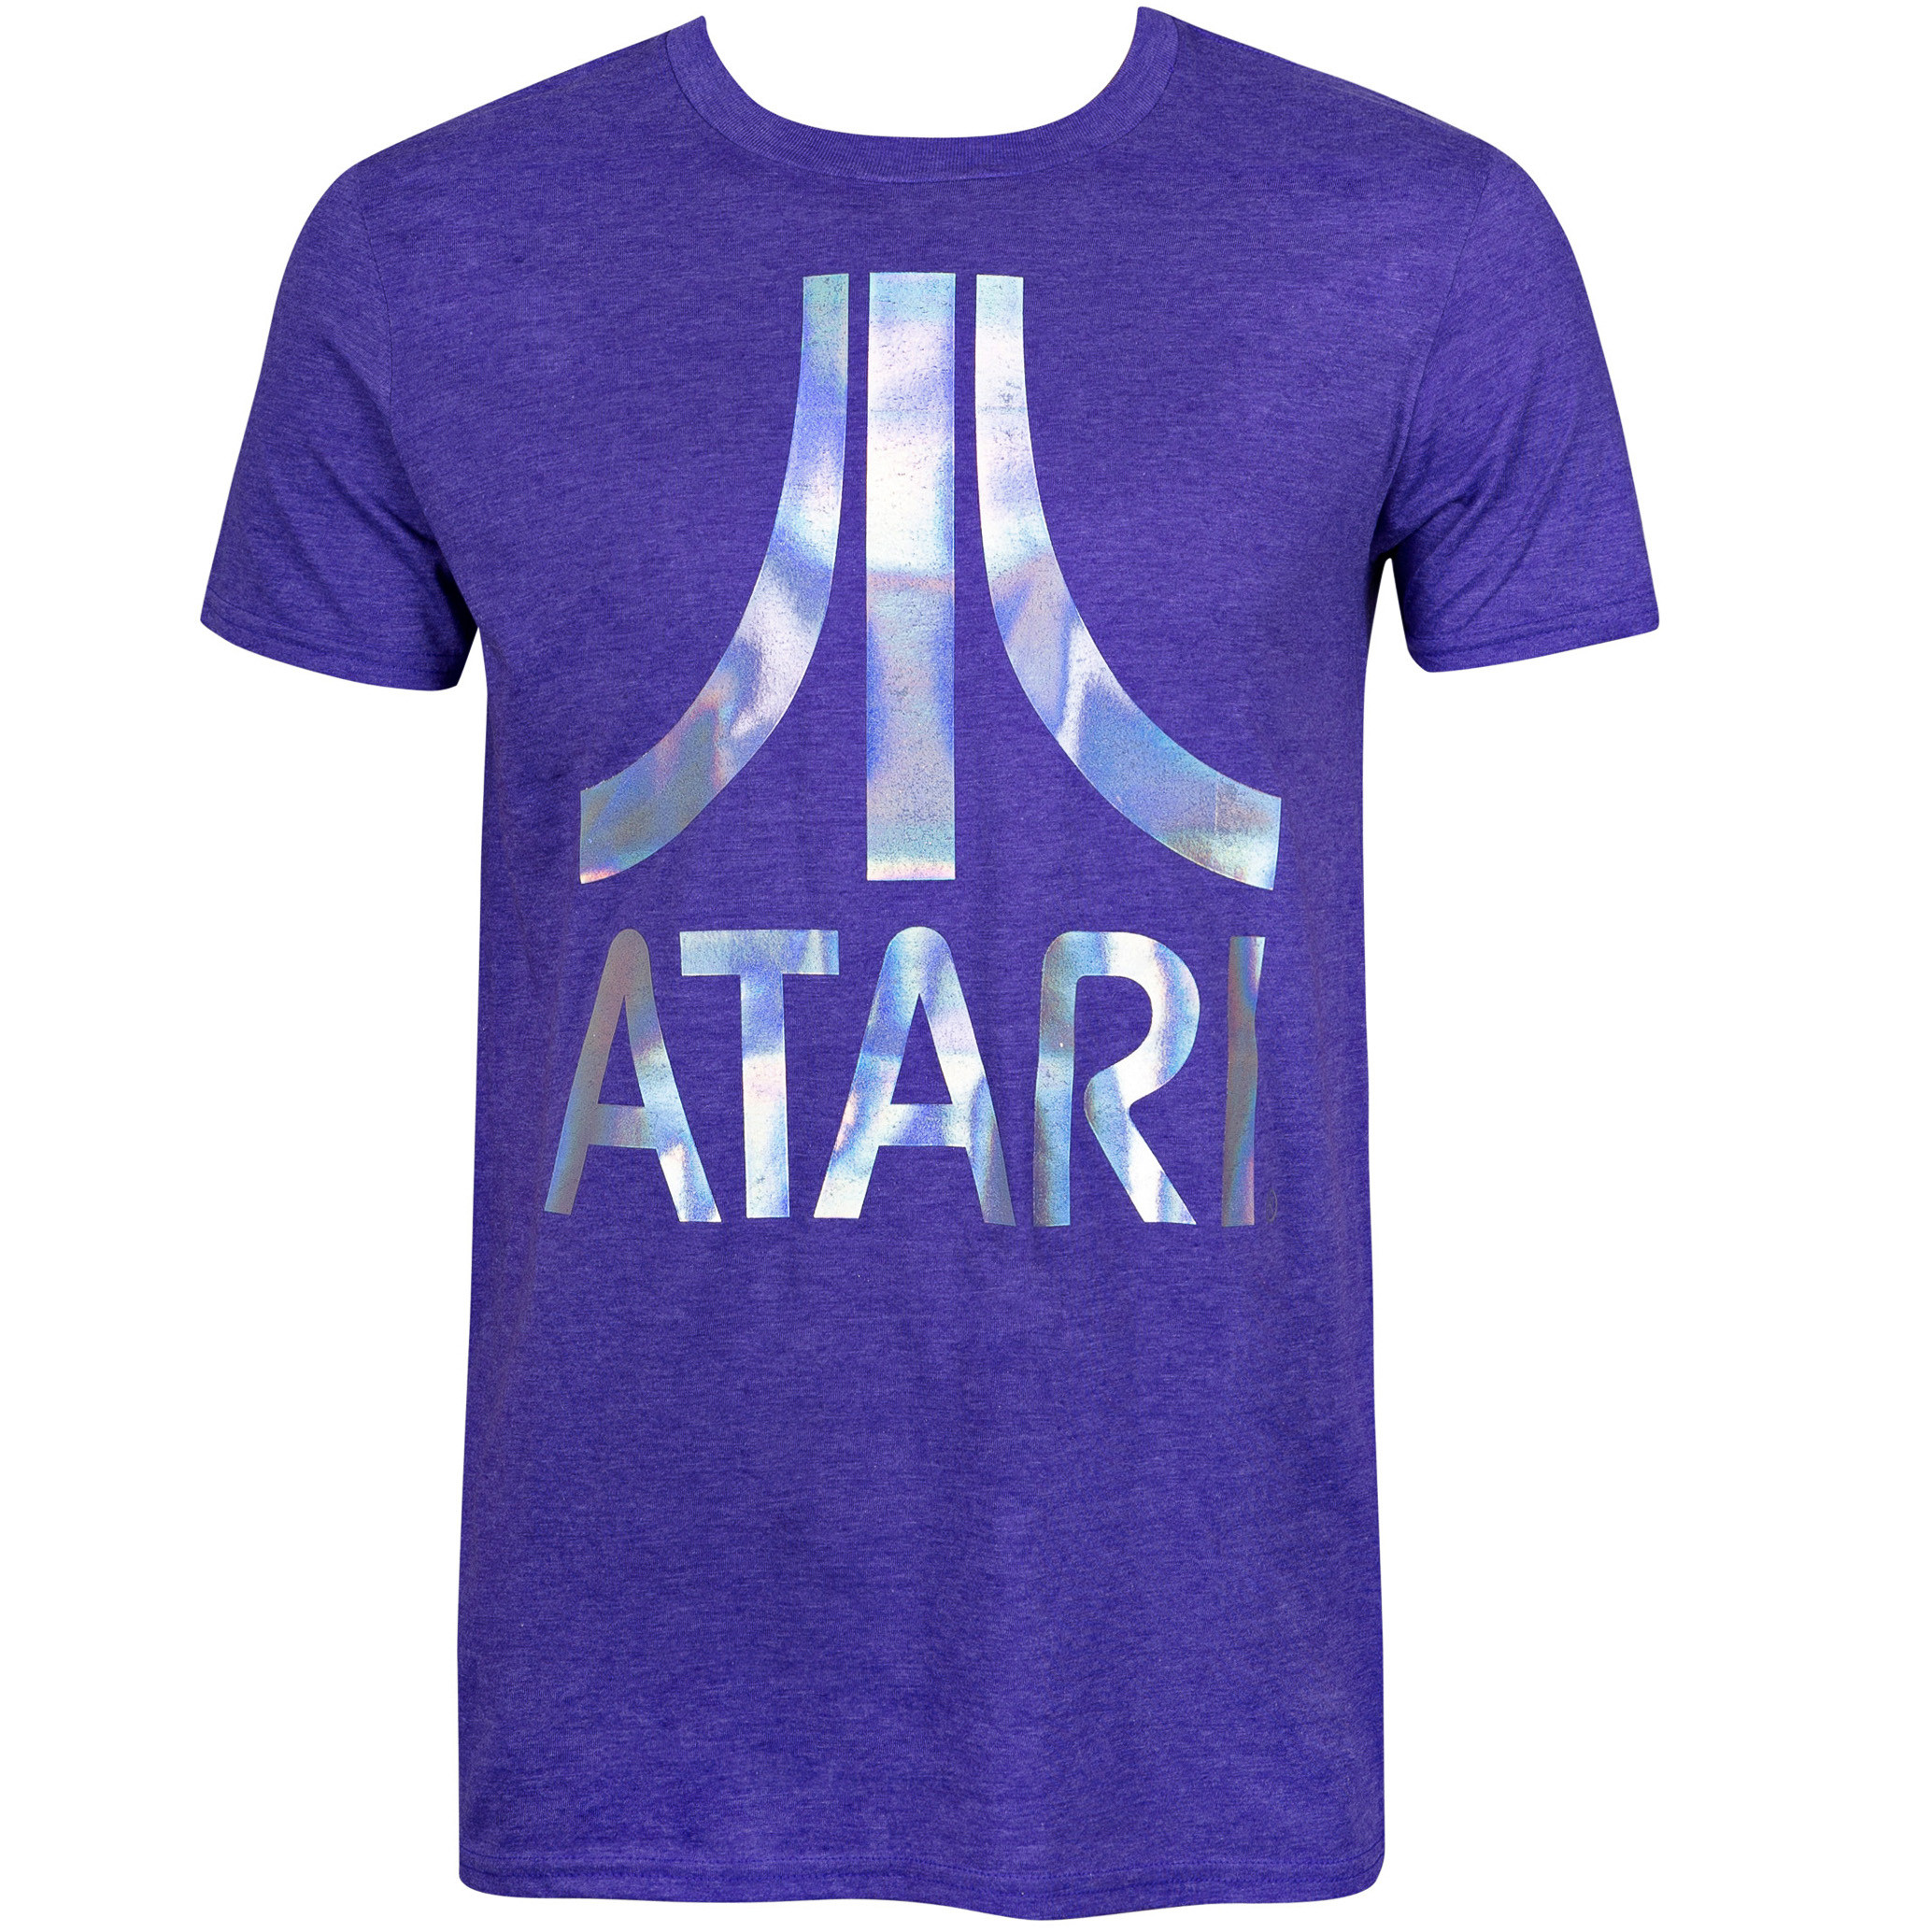 Atari Foil Logo Purple Tee Shirt